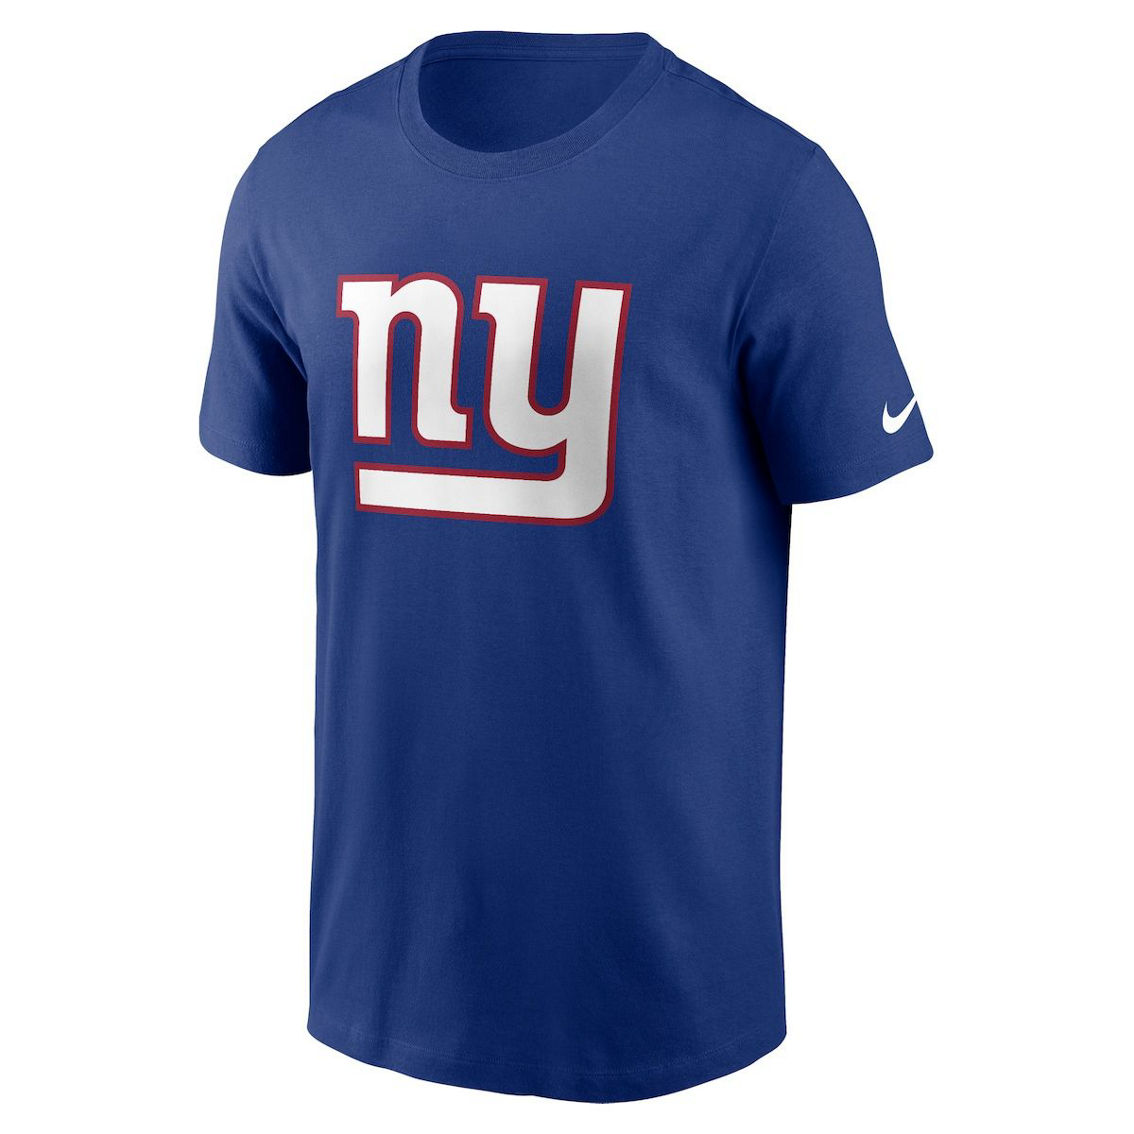 Nike Men's Royal New York Giants Primary Logo T-Shirt - Image 3 of 4